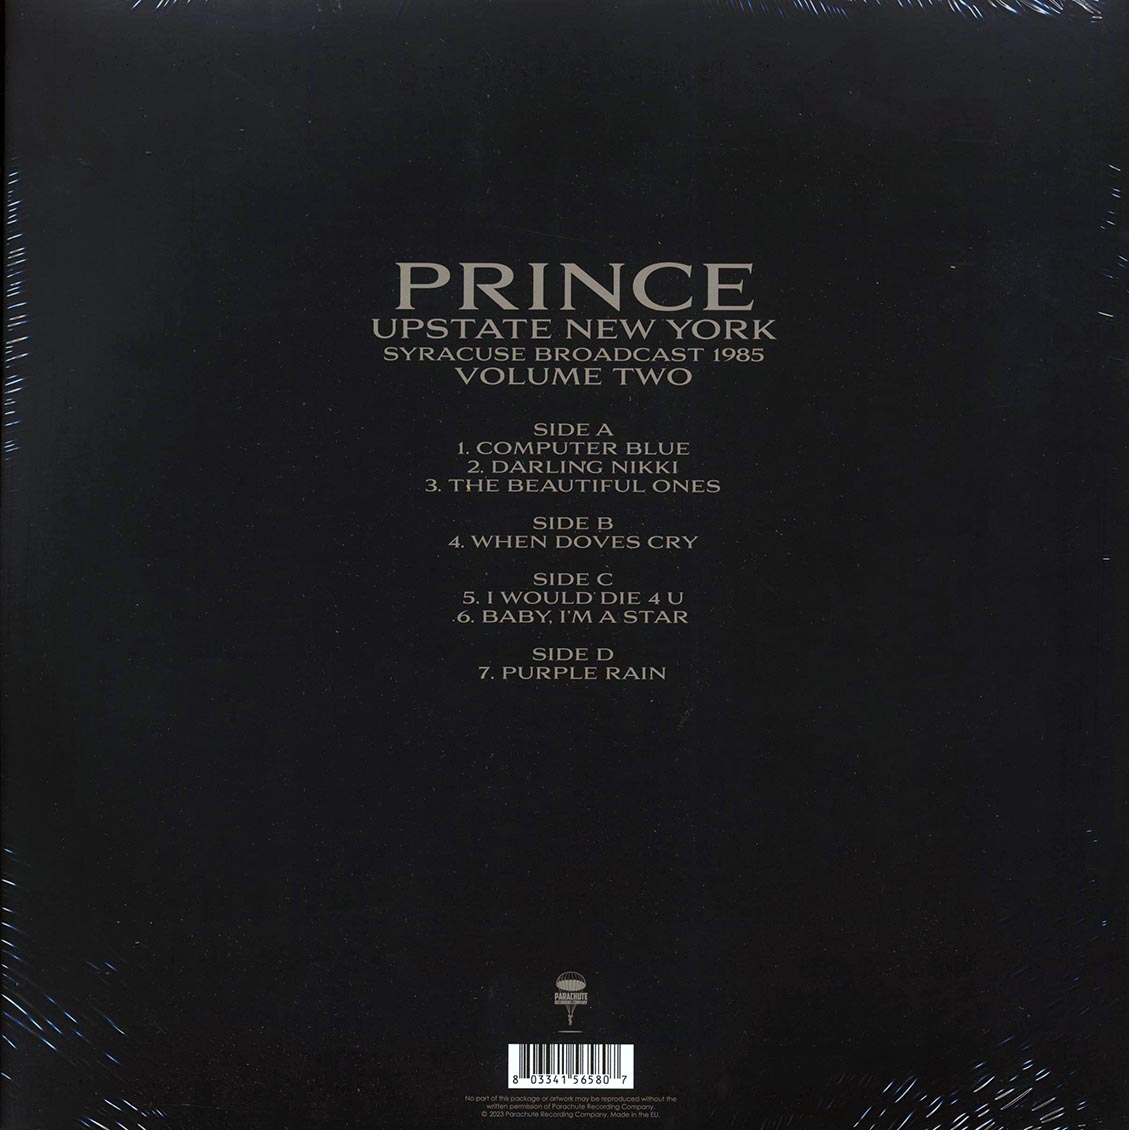 Prince - Upstate New York Volume 2: Syracuse Broadcast 1985 (2xLP) - Vinyl LP, LP